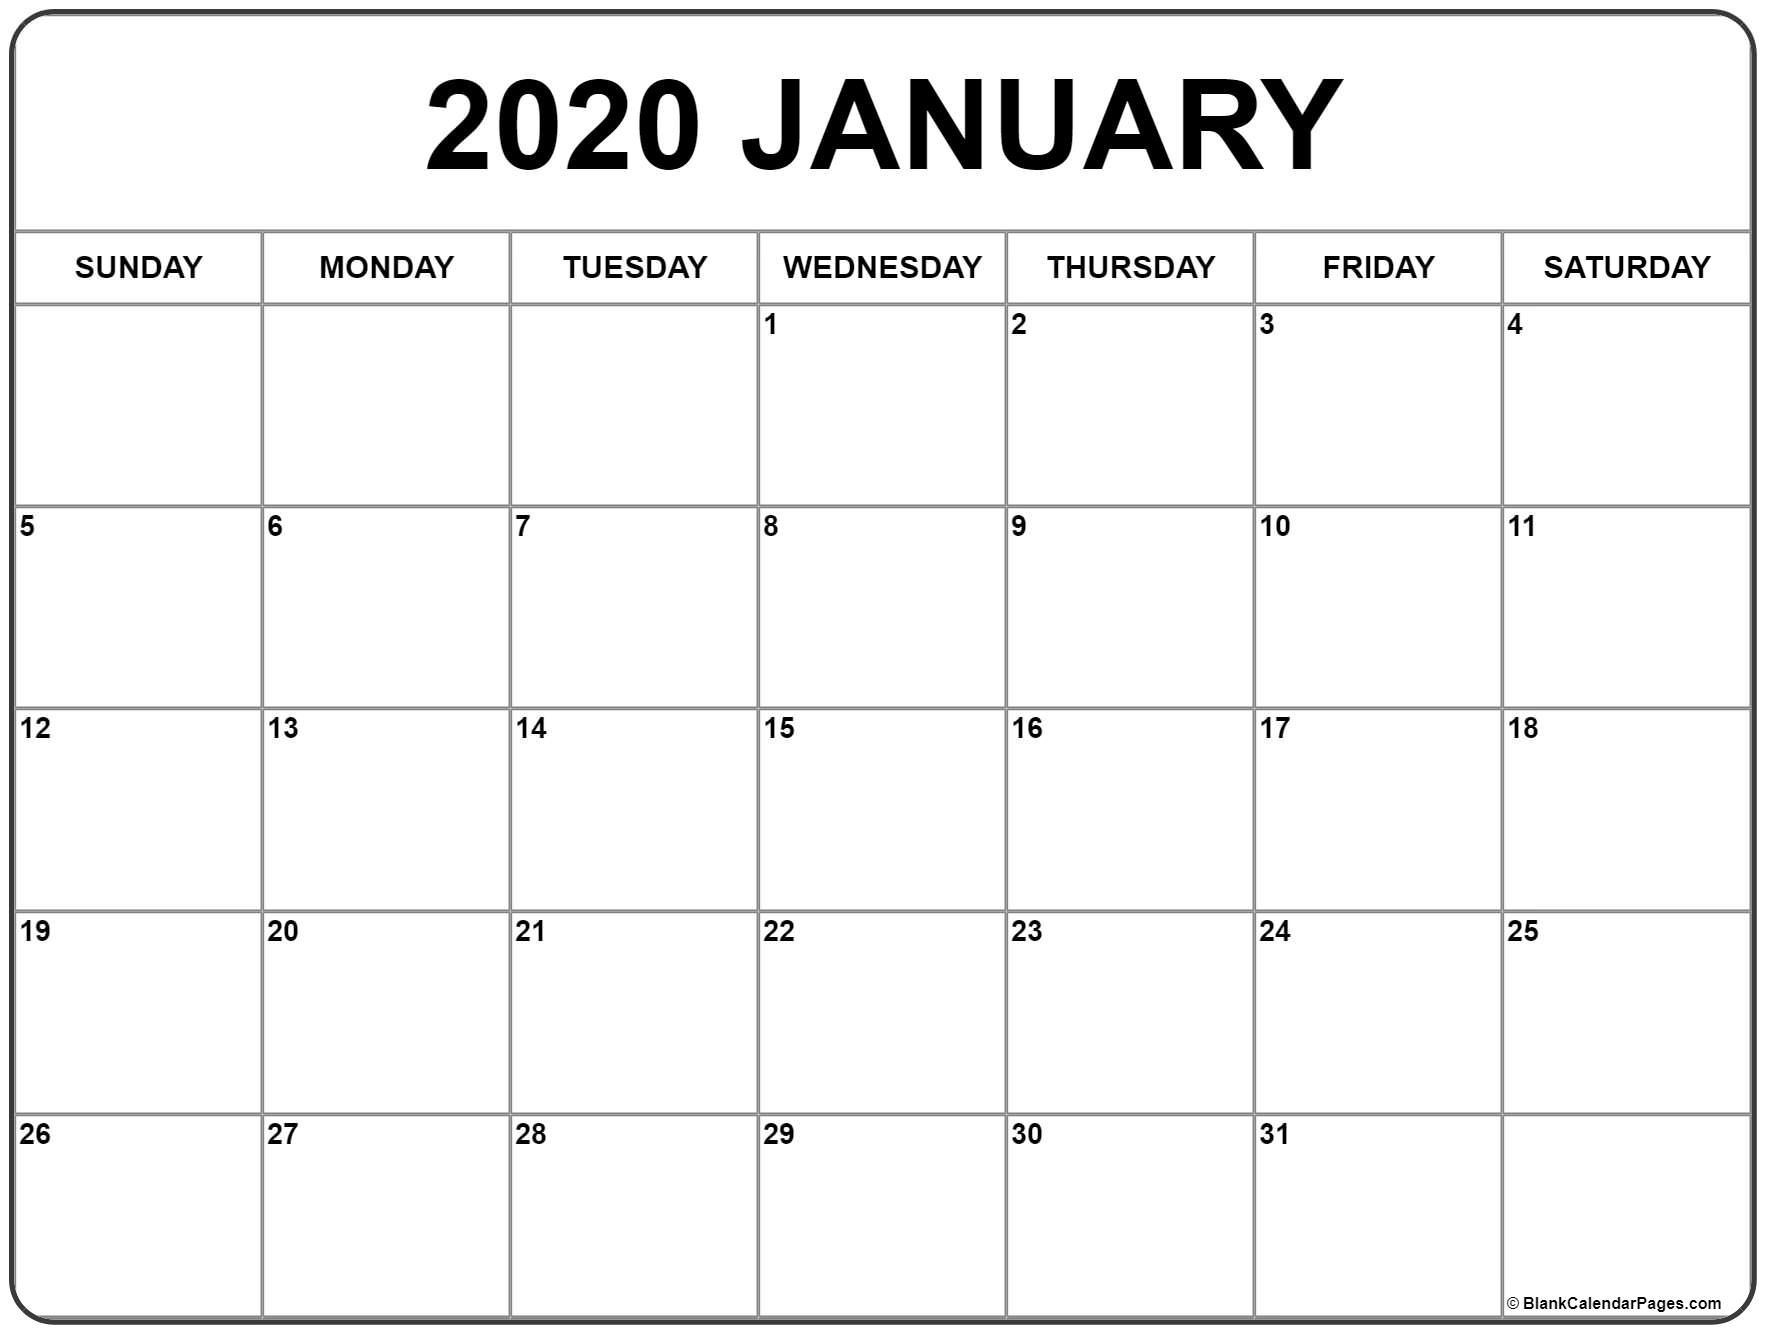 January 2020 Calendar | Free Printable Monthly Calendars-Printable January 2020 Calendar With Holidays